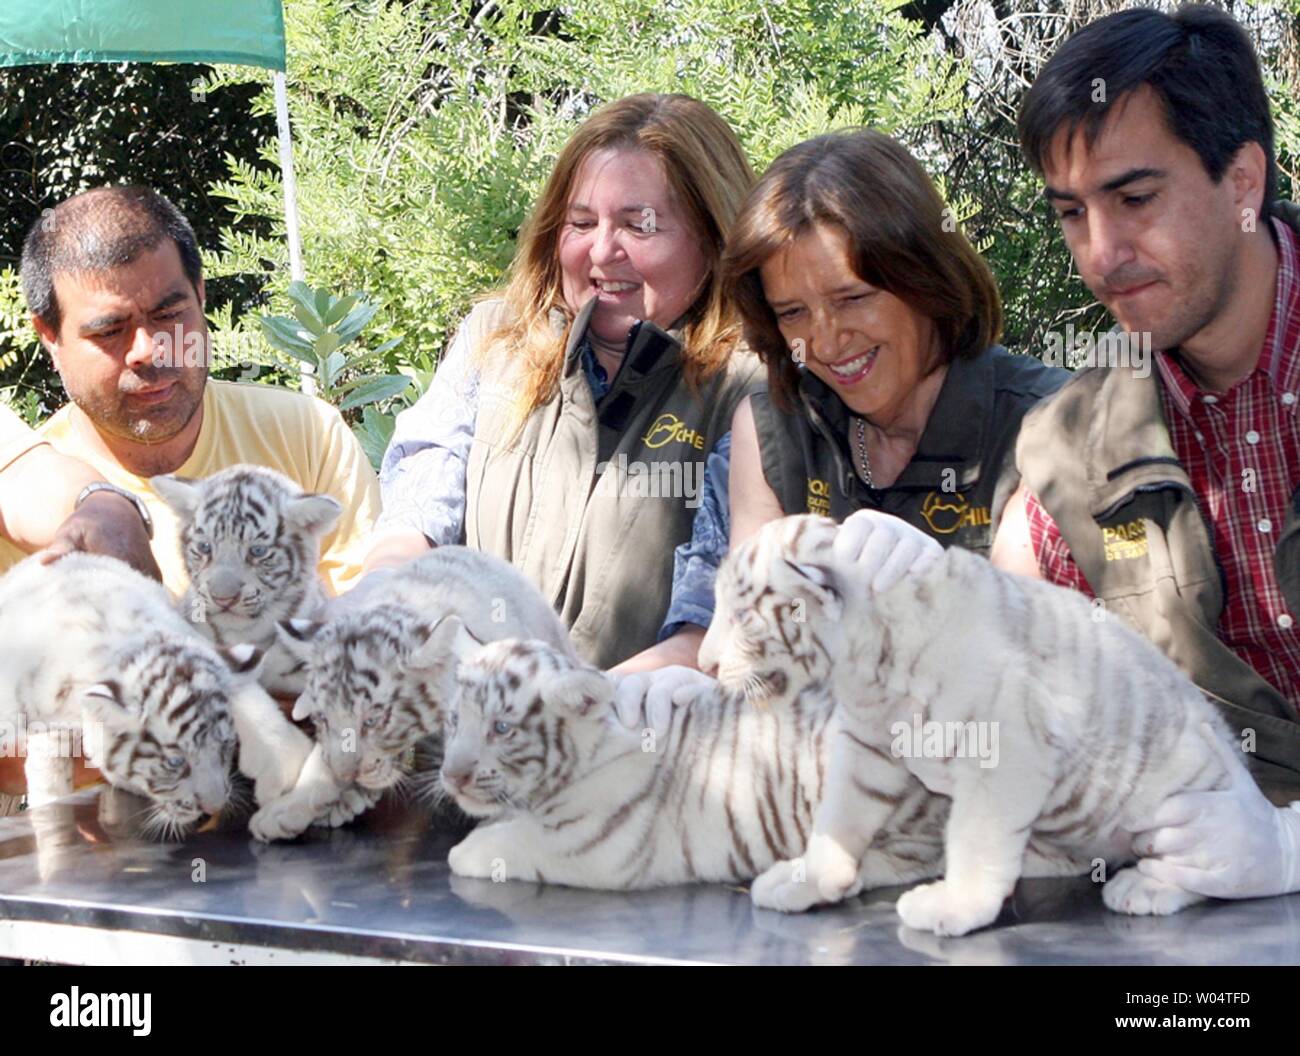 Rare white tiger cub dies at Liberec Zoo in Czech Republic - CBS News